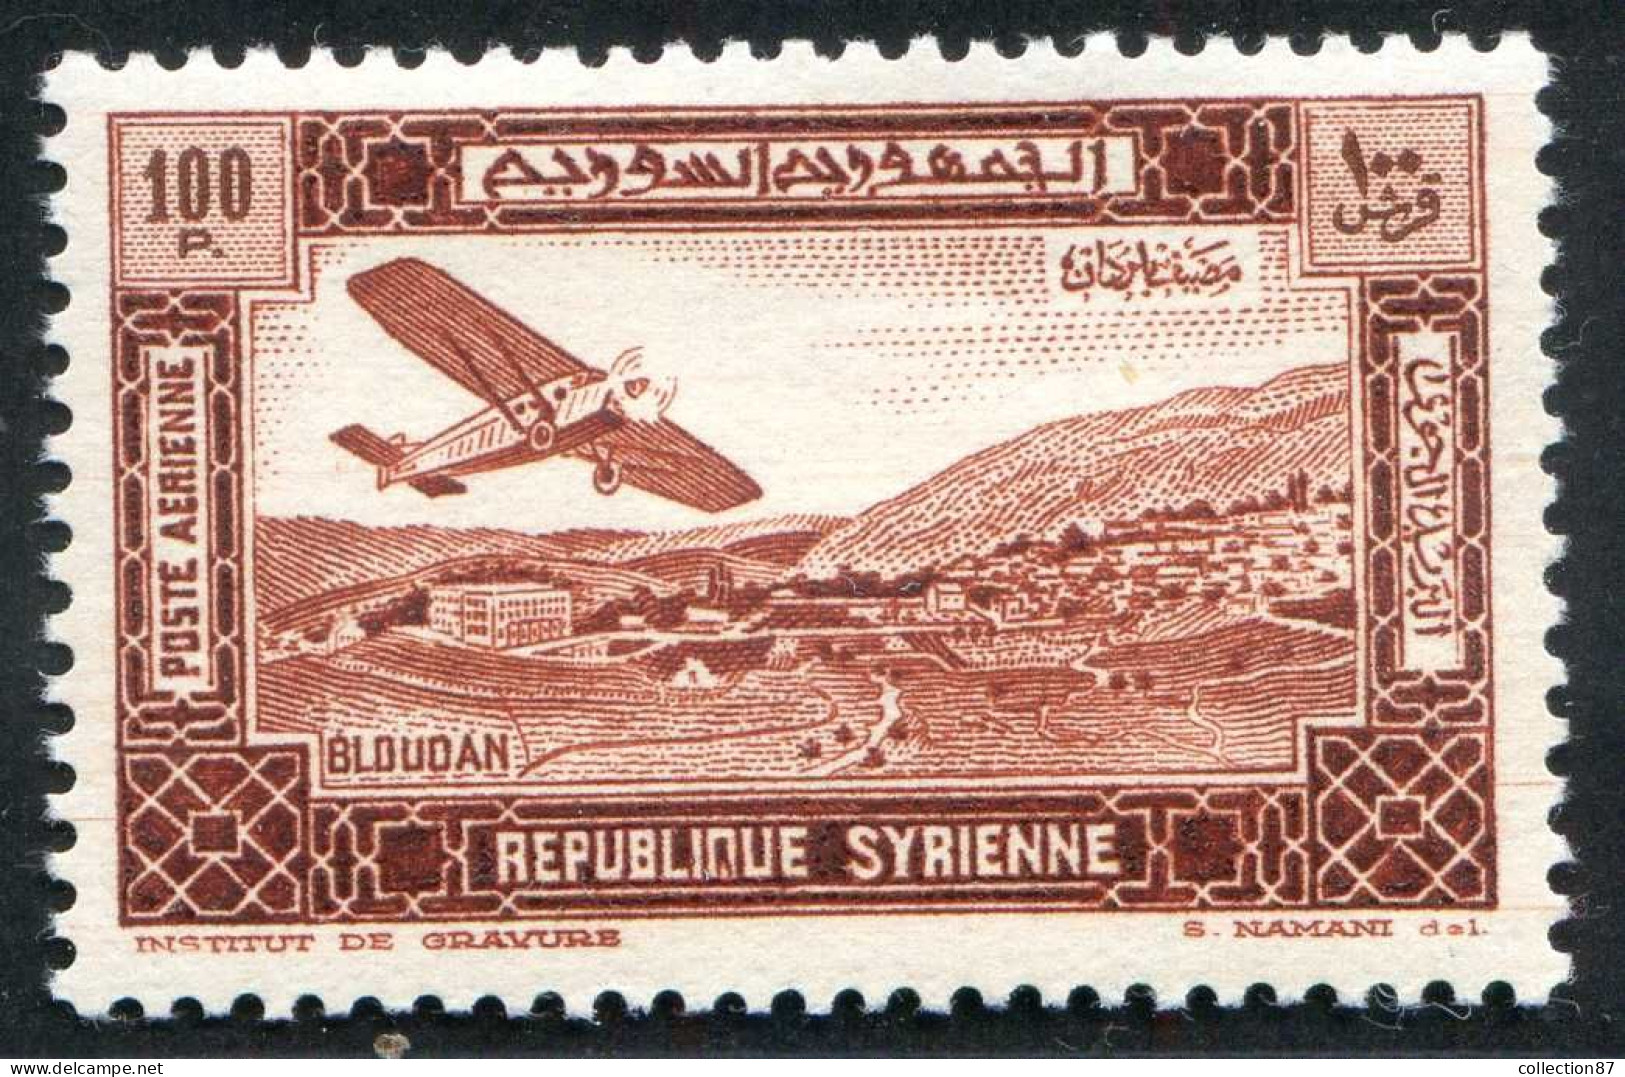 REF 086 > SYRIE < PA N° 69 * < Neuf Quasi Invisible Voir Dos - MH * < Poste Aérienne - Aéro - Air Mail - Poste Aérienne